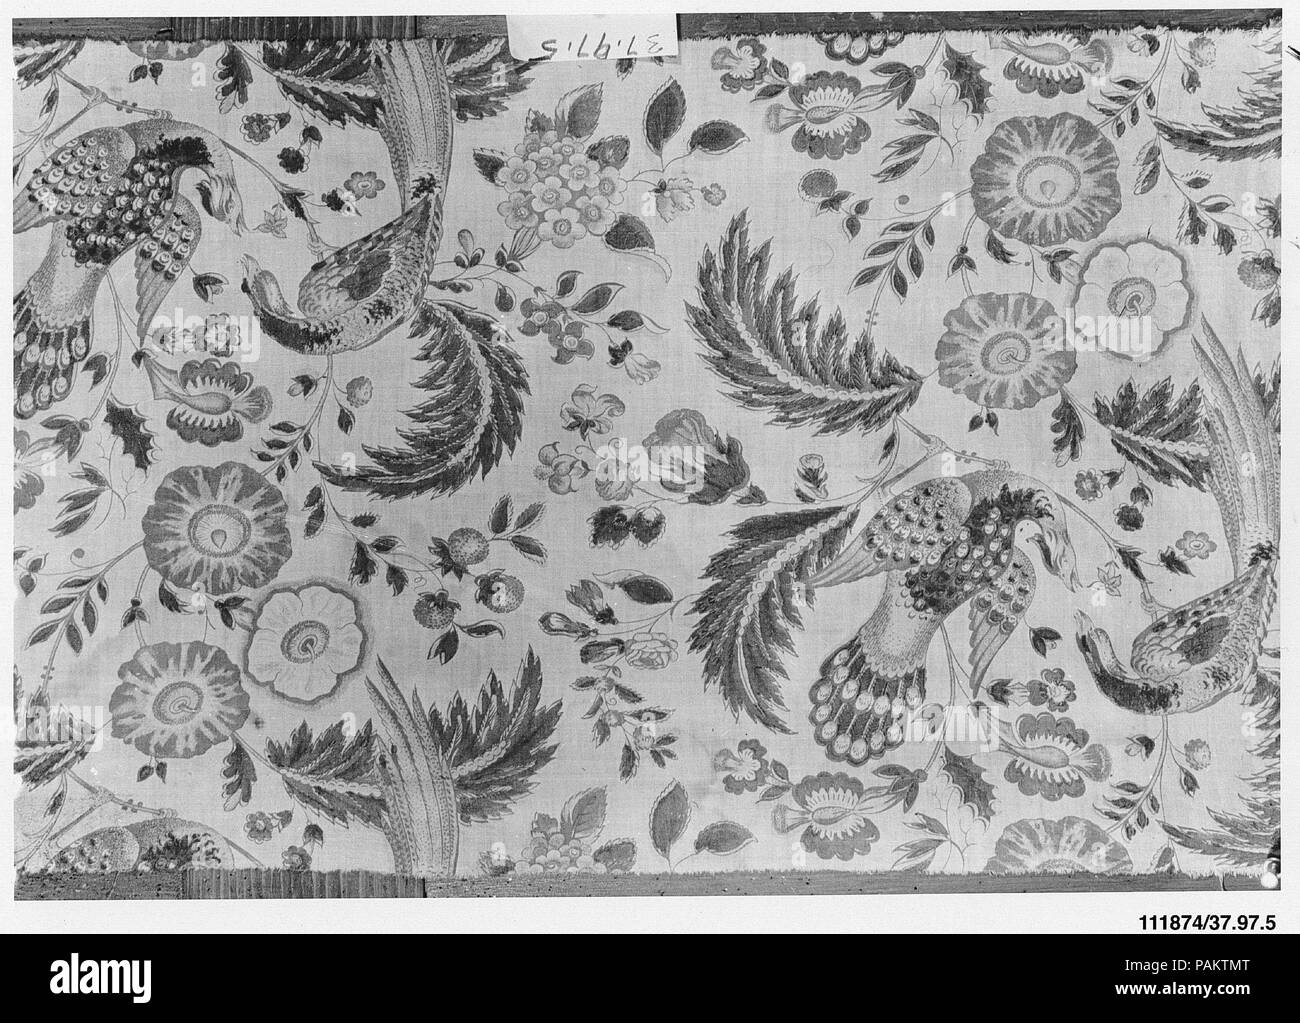 Piece. Culture: British. Dimensions: L. 23 x W. 14 inches   58.4 x 35.6 cm. Date: 1830-35. Museum: Metropolitan Museum of Art, New York, USA. Stock Photo